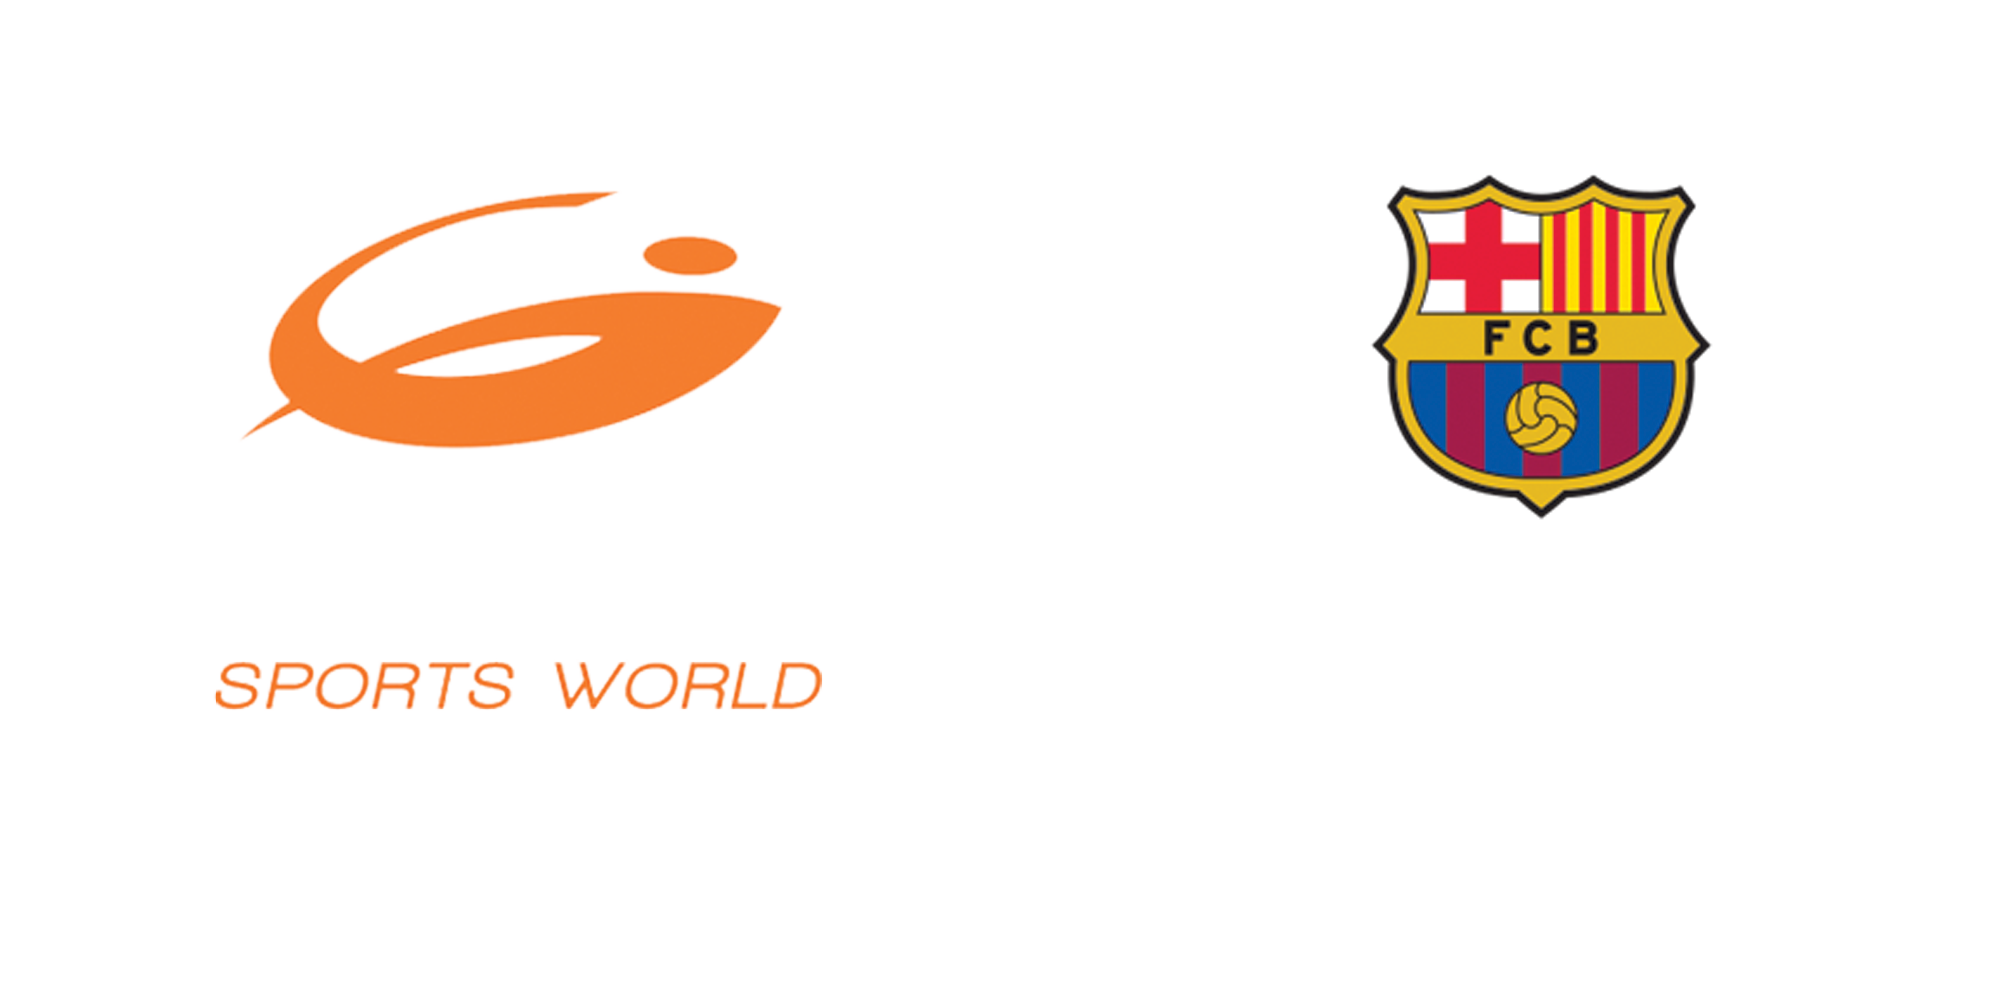 Grande Sports World FC Barcelona joint logo